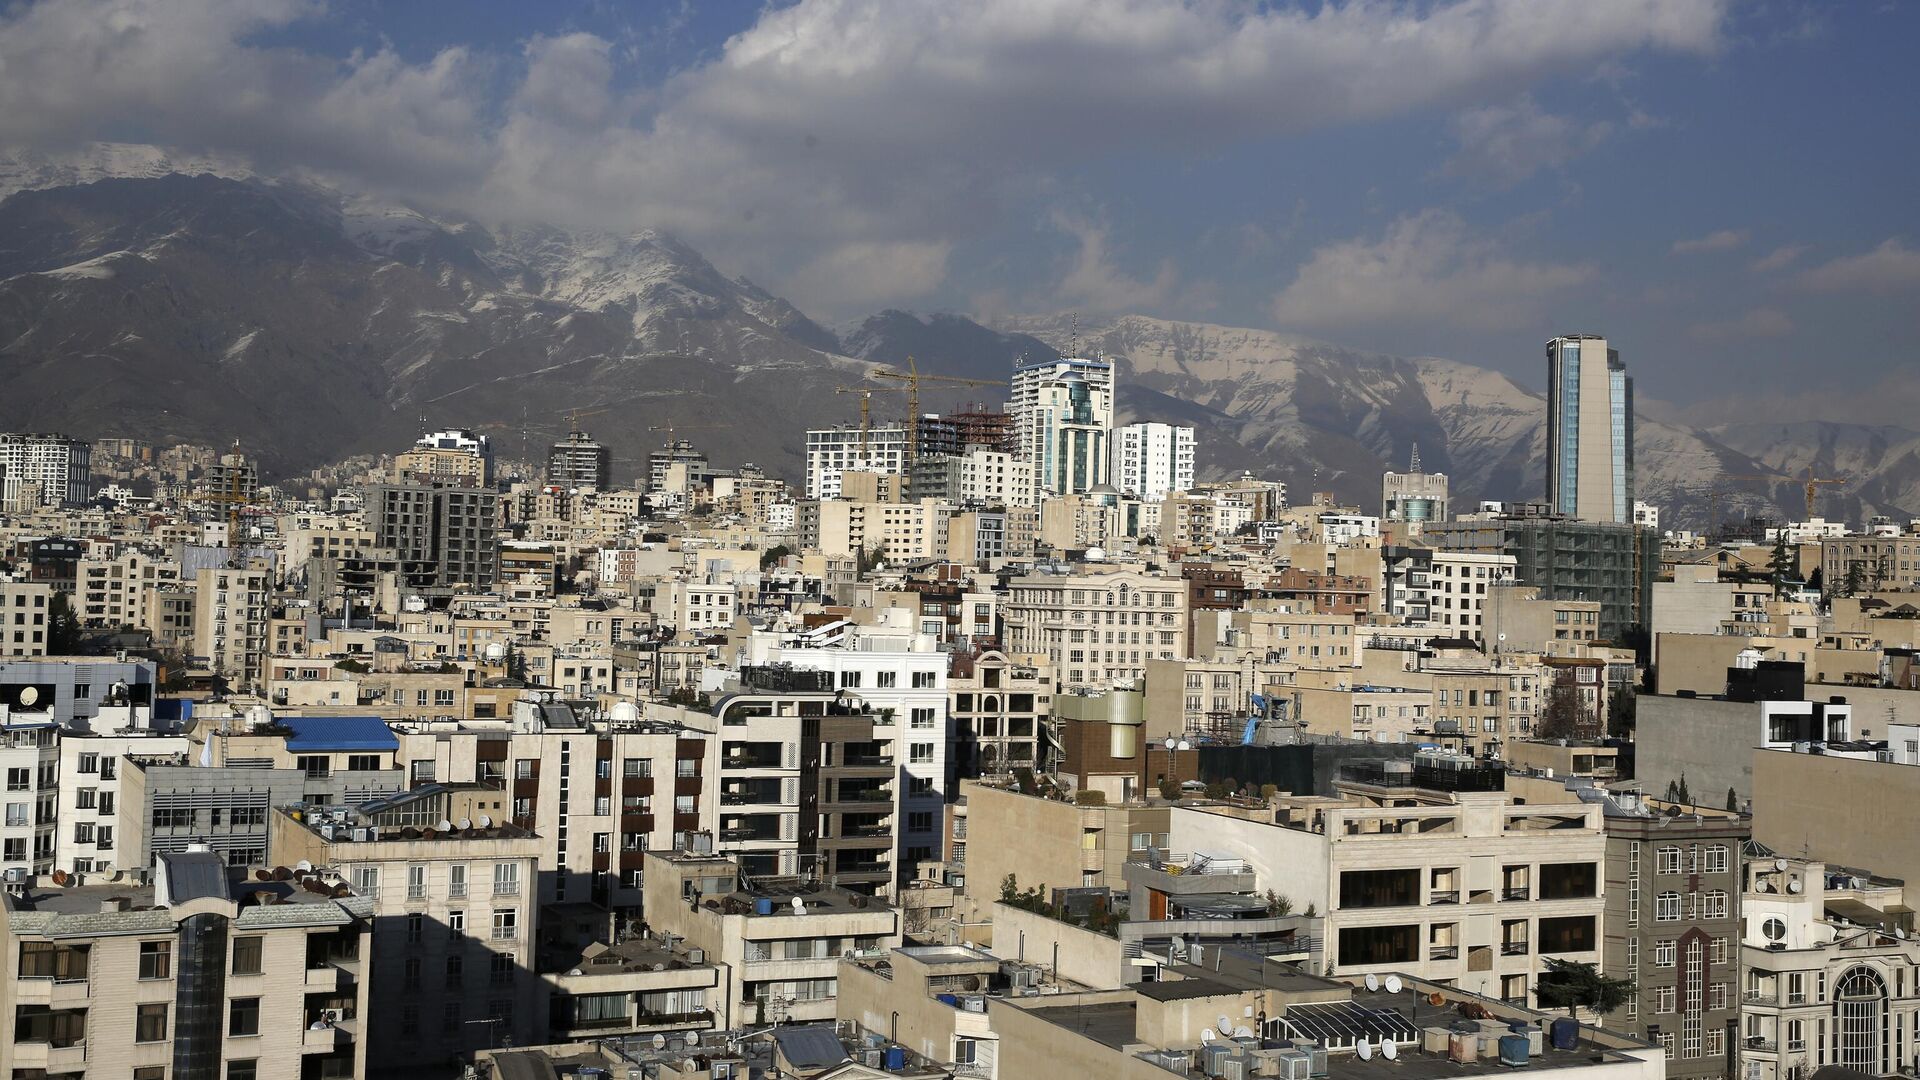 Gempa 5,9 Skala Ritcher Menghantam Iran: 2 Tewas dan 300 Lainnya Terluka